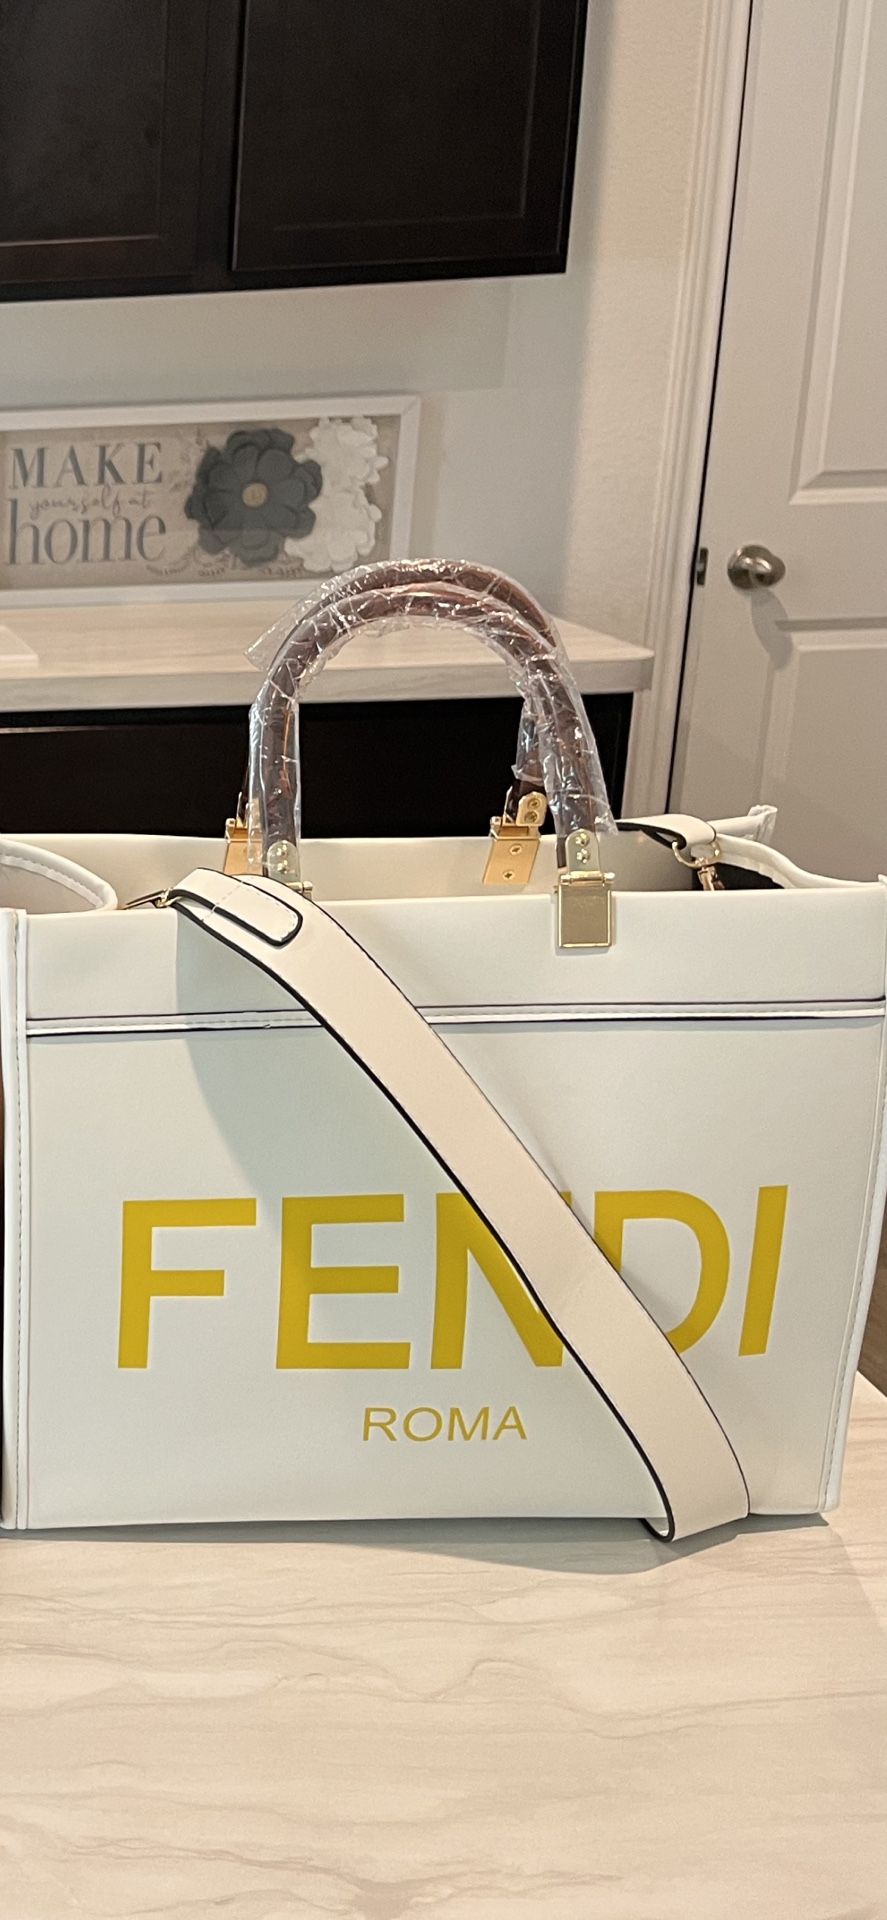 Fendi Bags Are $150